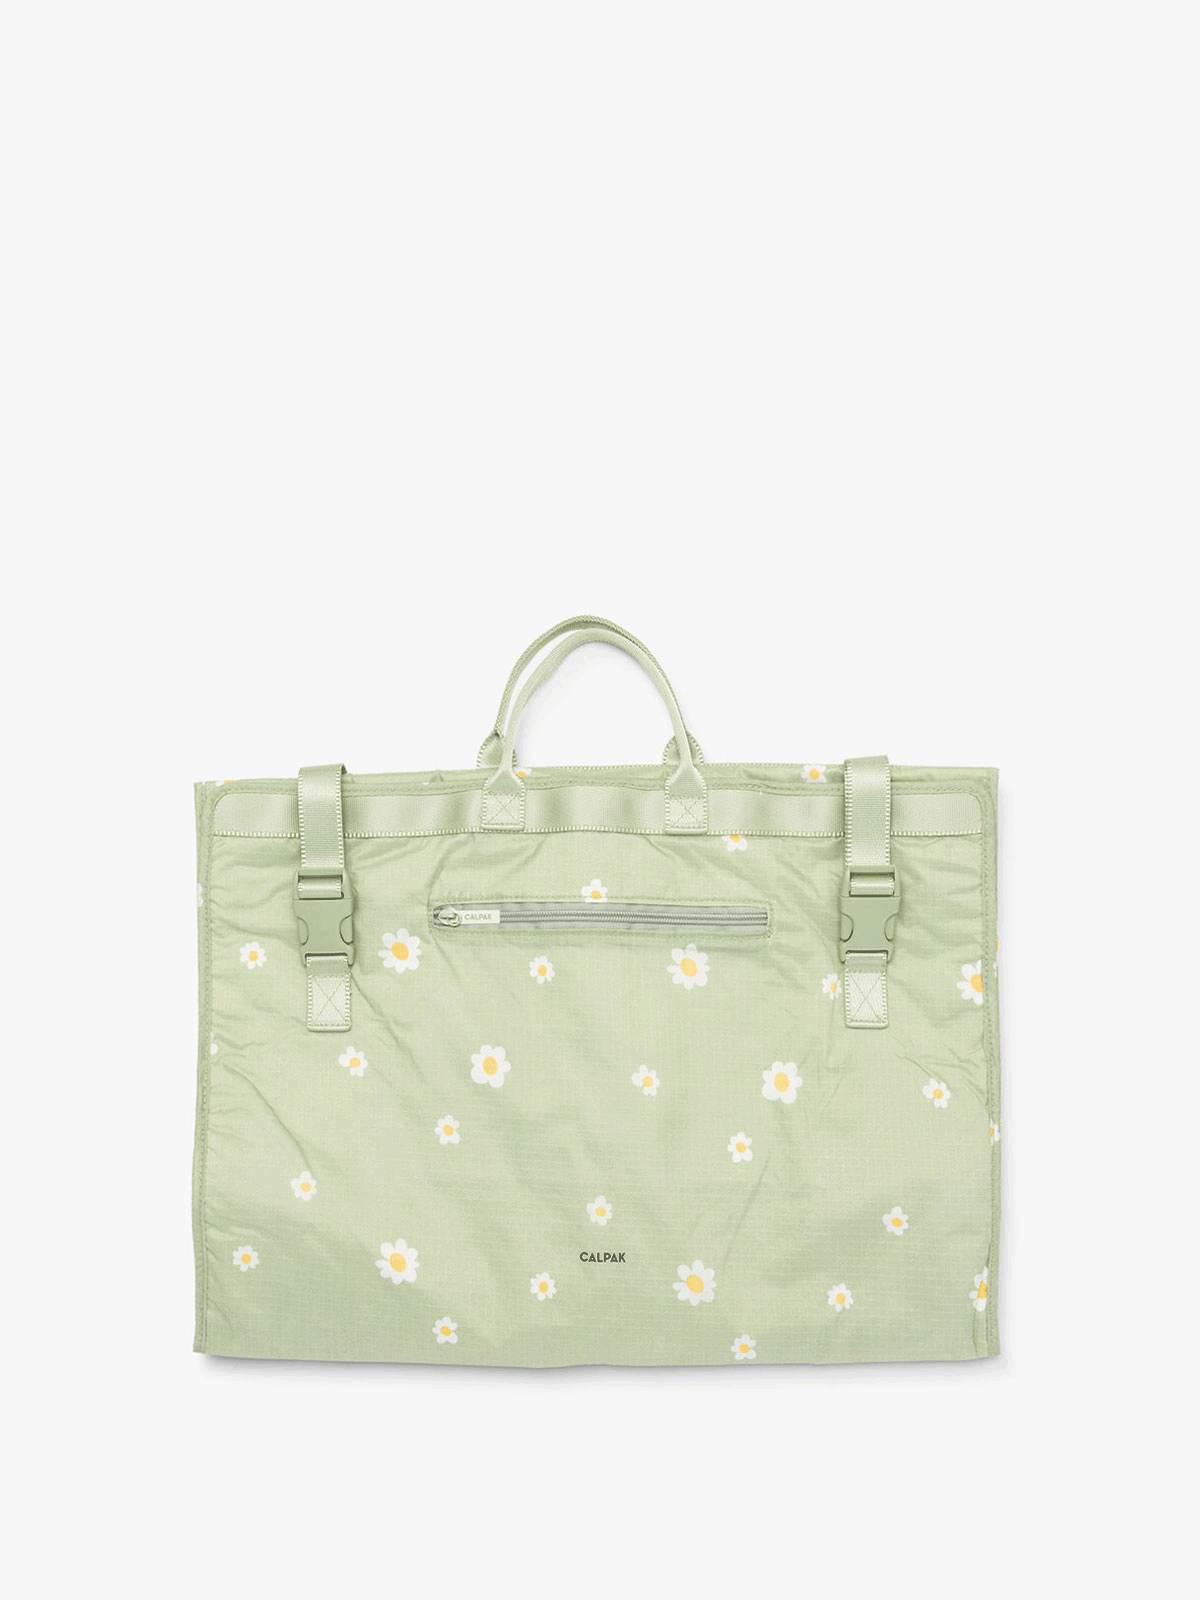 CALPAK Compakt small foldable garment bag in daisy